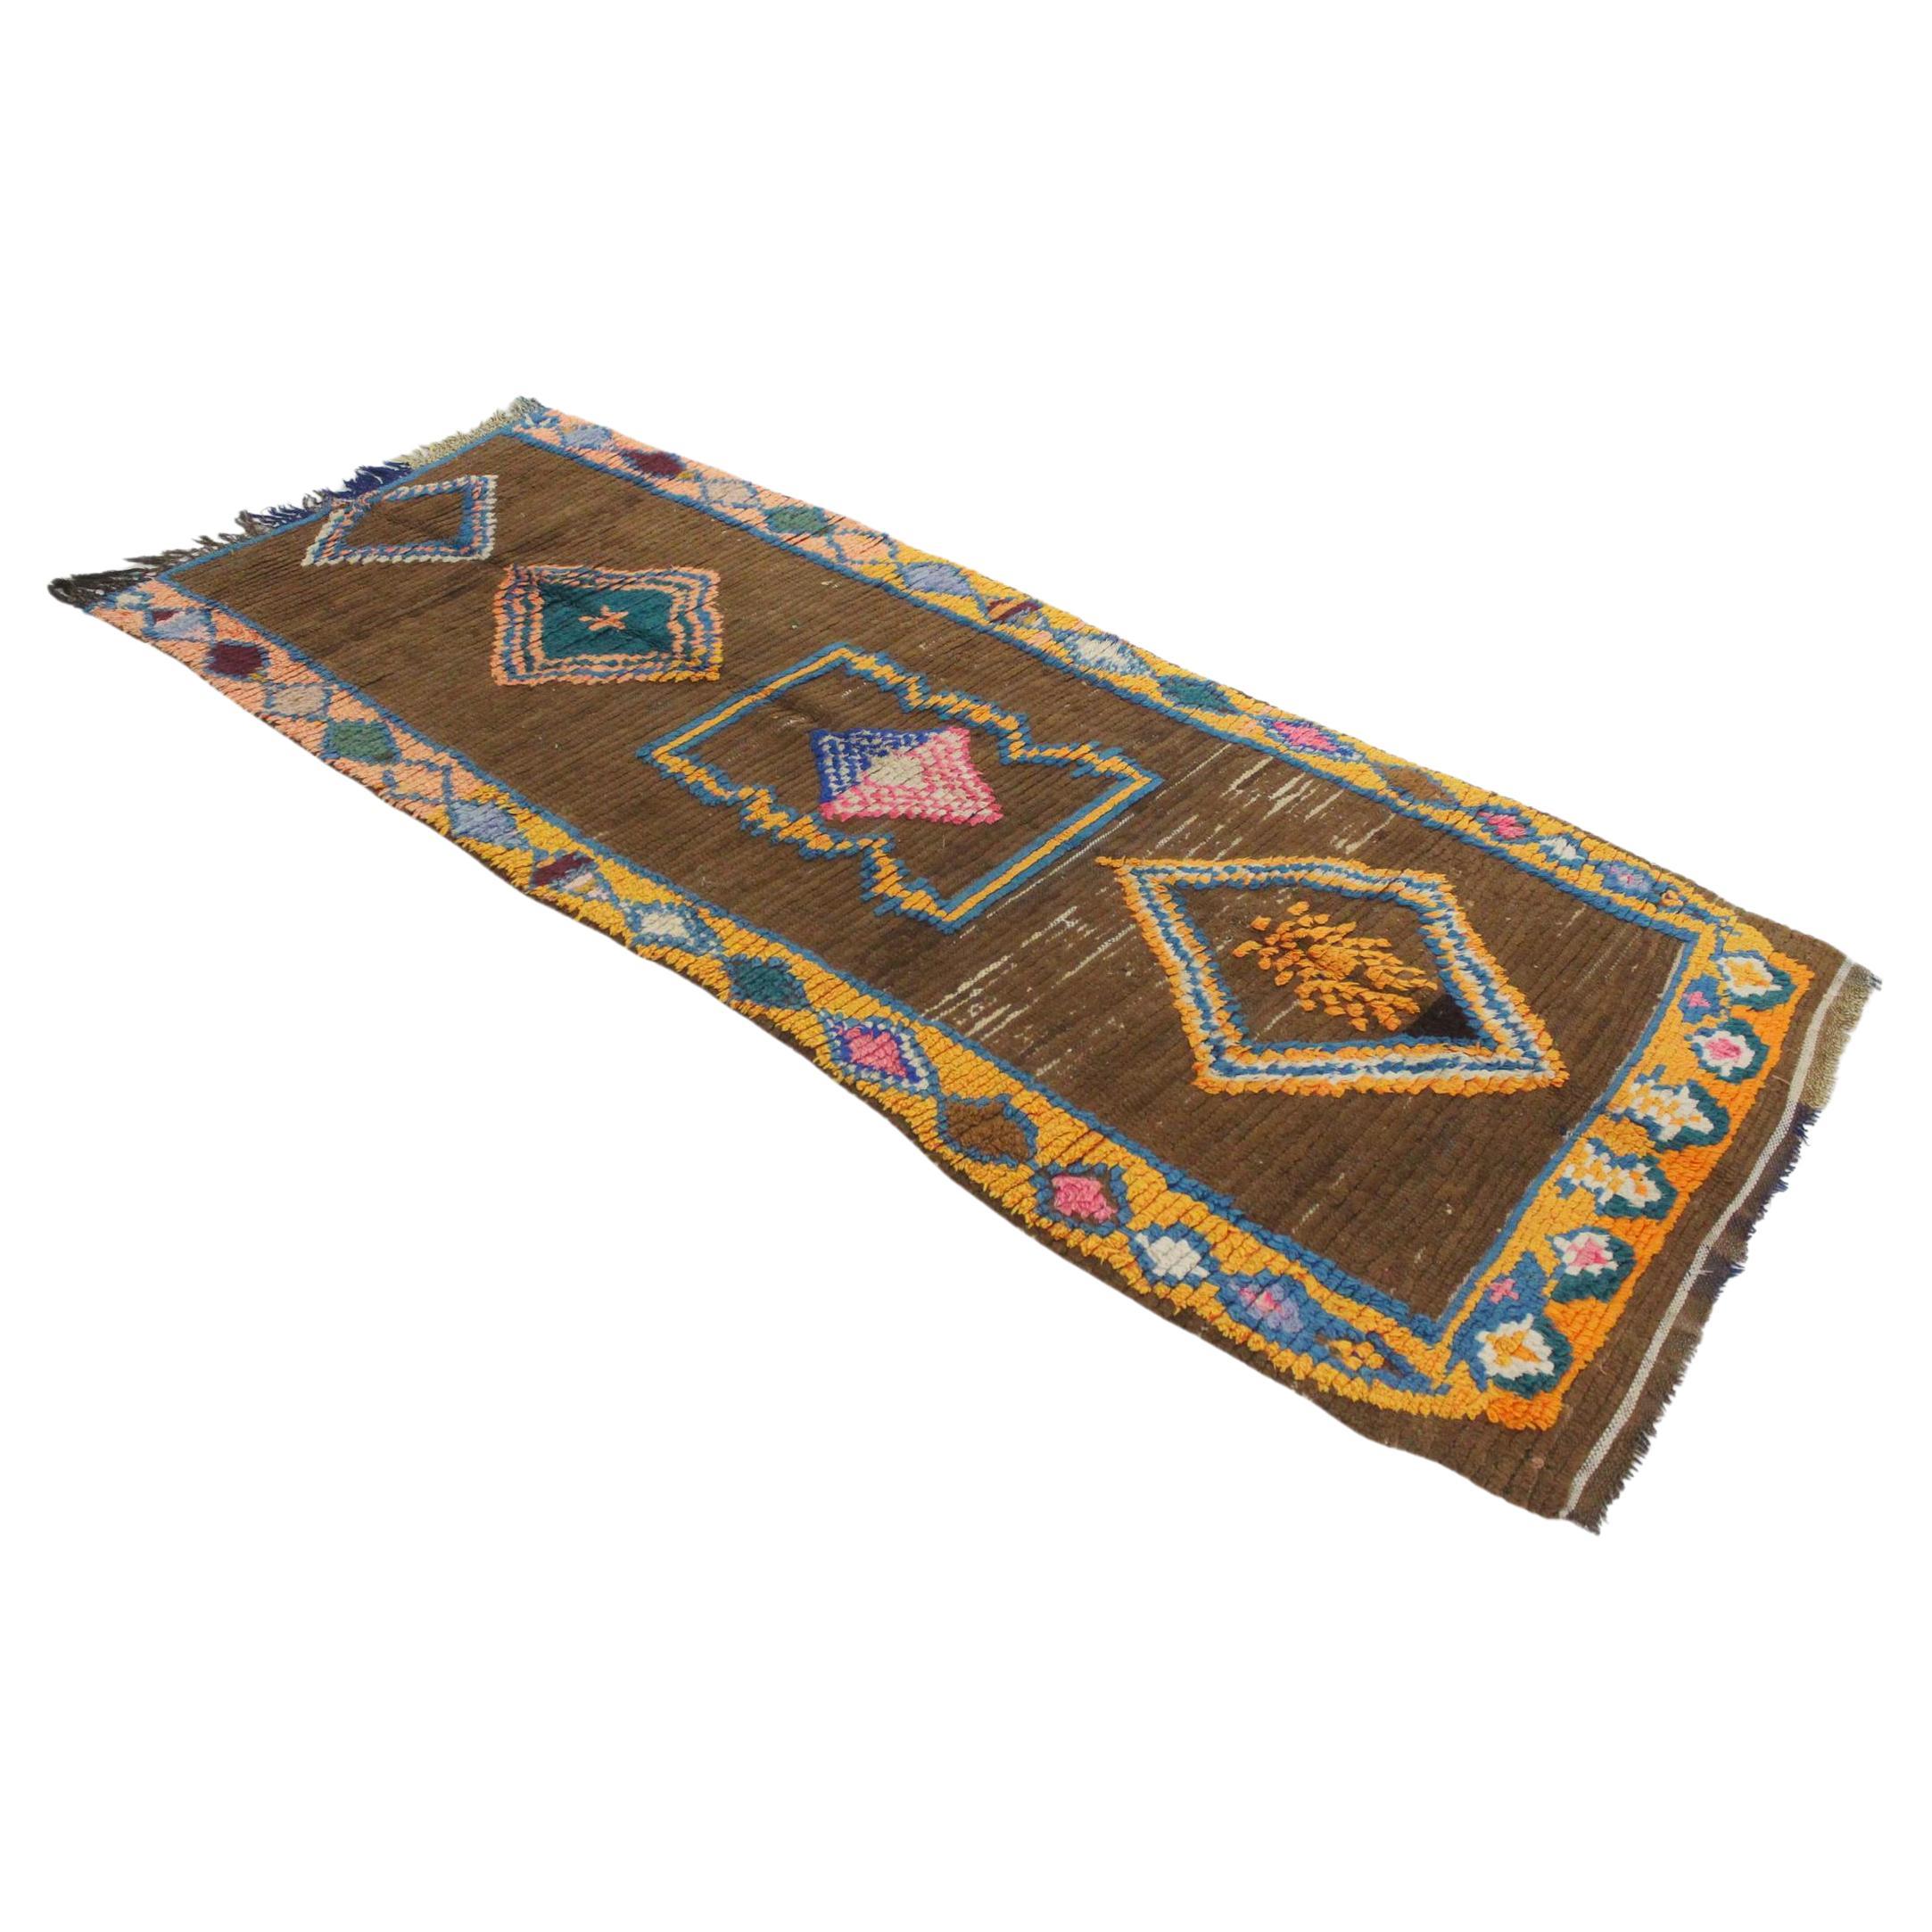 Vintage Moroccan Boujad runner rug - Brown/pink/blue - 3.2x7.5feet / 97x228cm For Sale